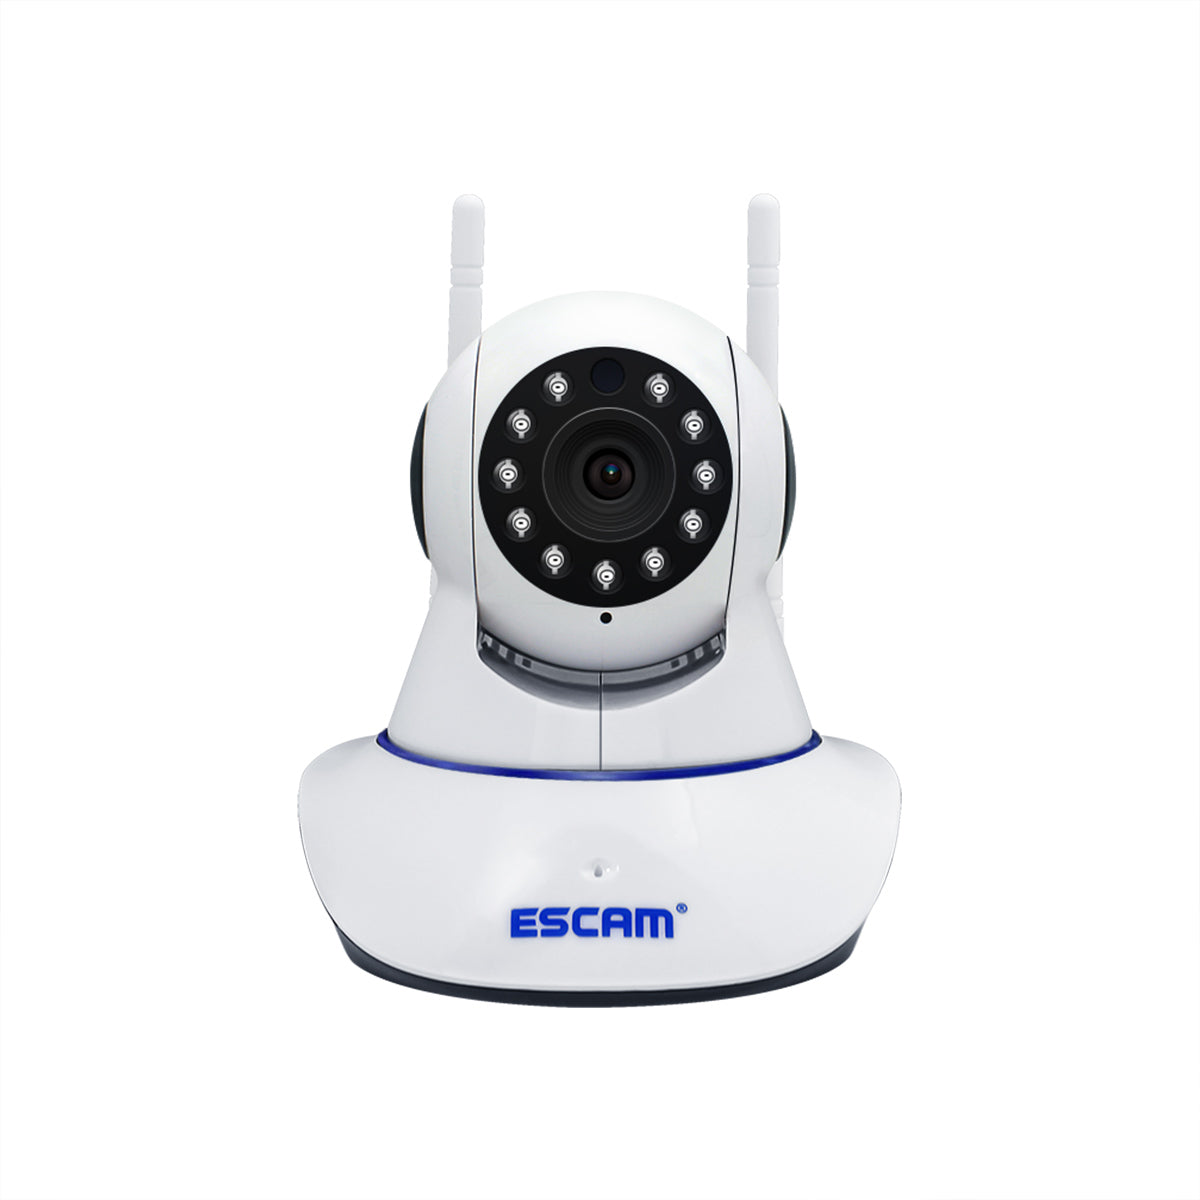 ESCAM G01 HD 1080P 200WDual Antenna 1080P Pan/Tilt WiFi IR IP Camera Support ONVIF Two Way Talk Night Vision EU Plug